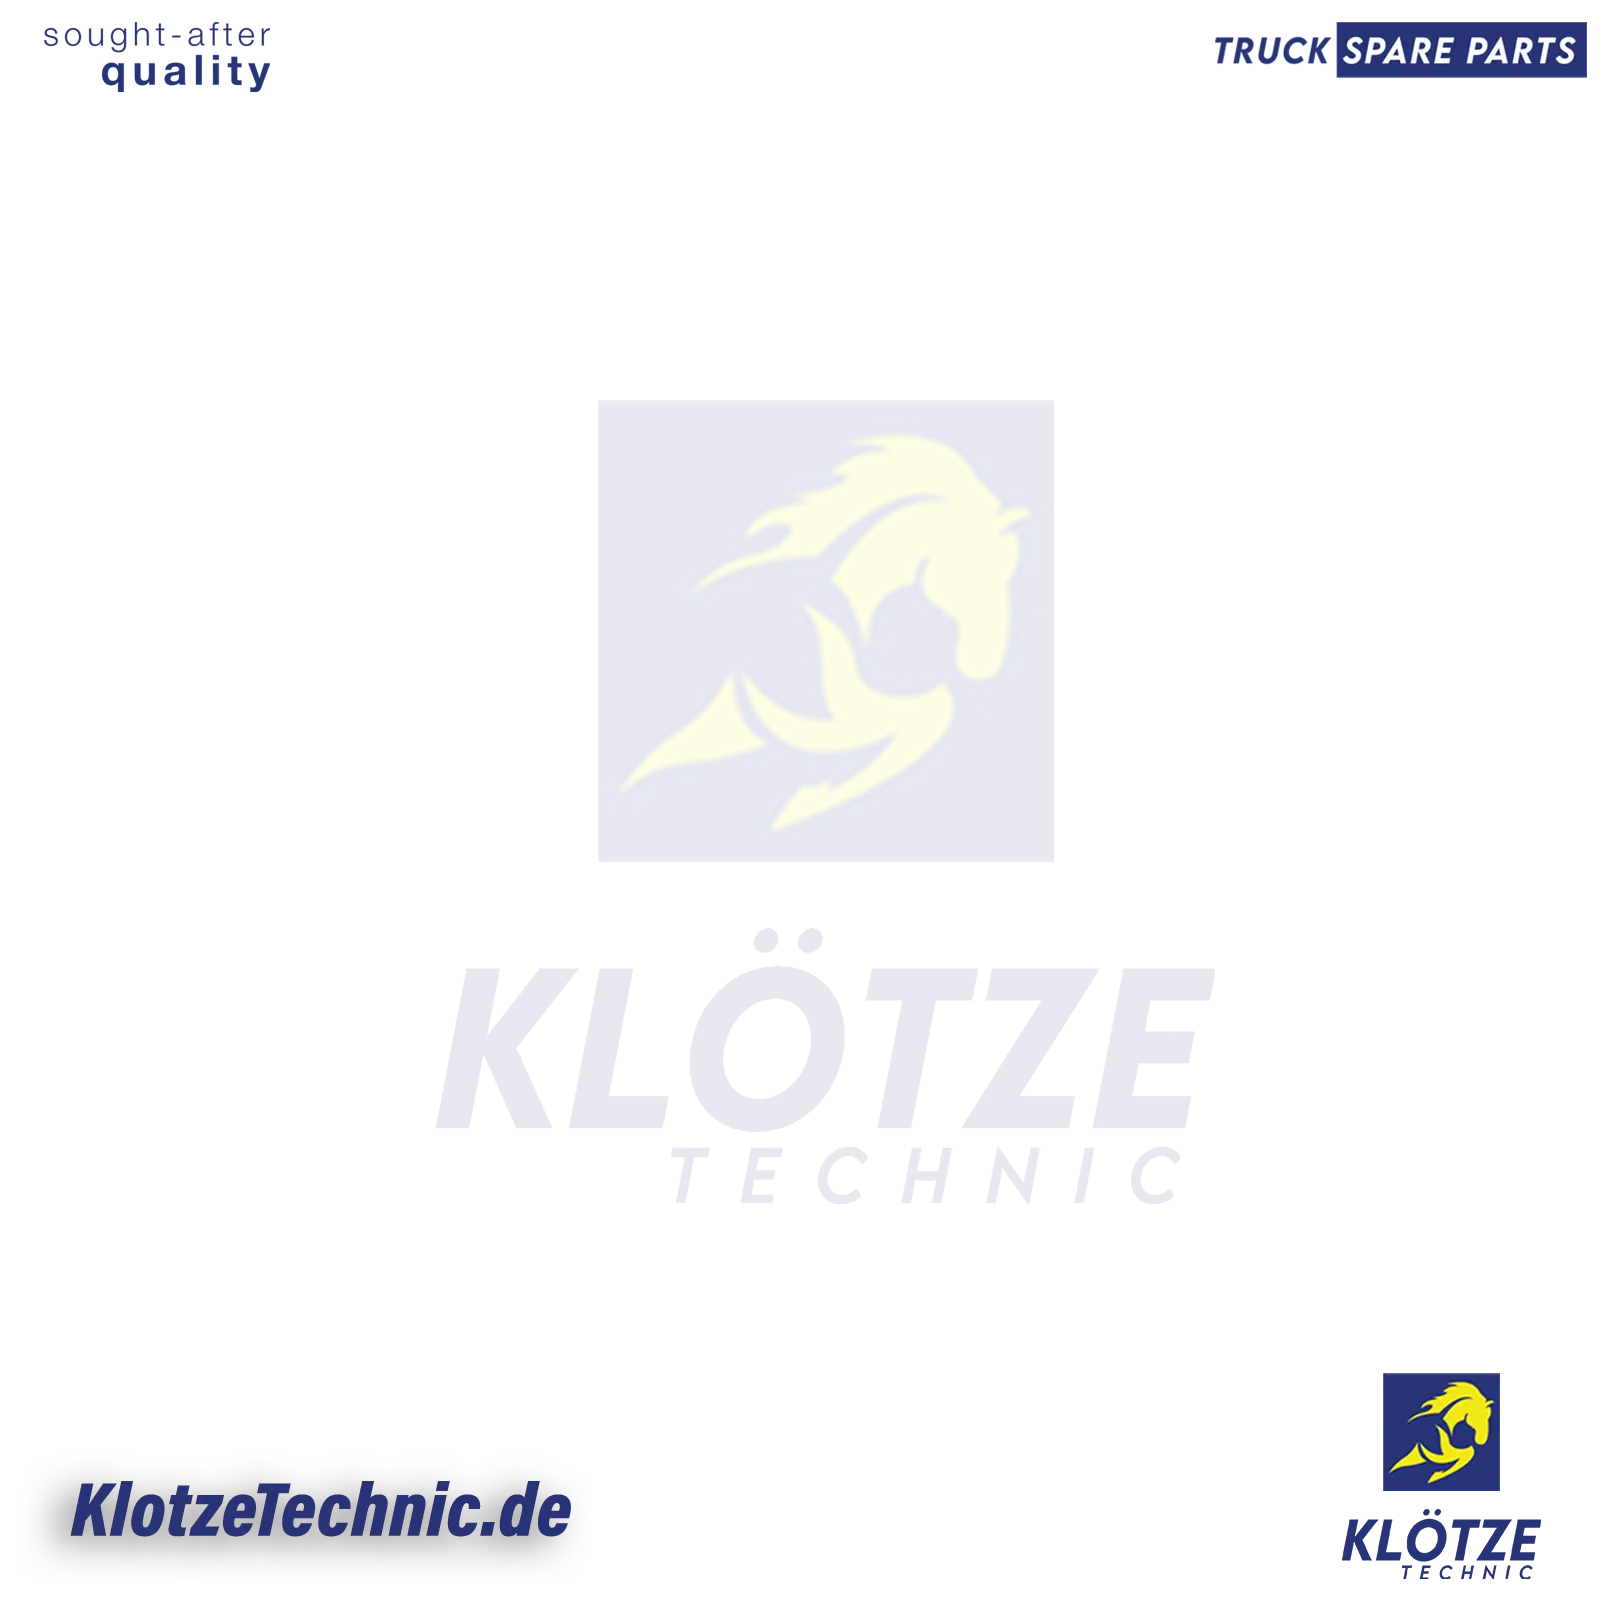 Service kit, filter - S, 1732951, 564550, ZG02091-0008 || Klötze Technic